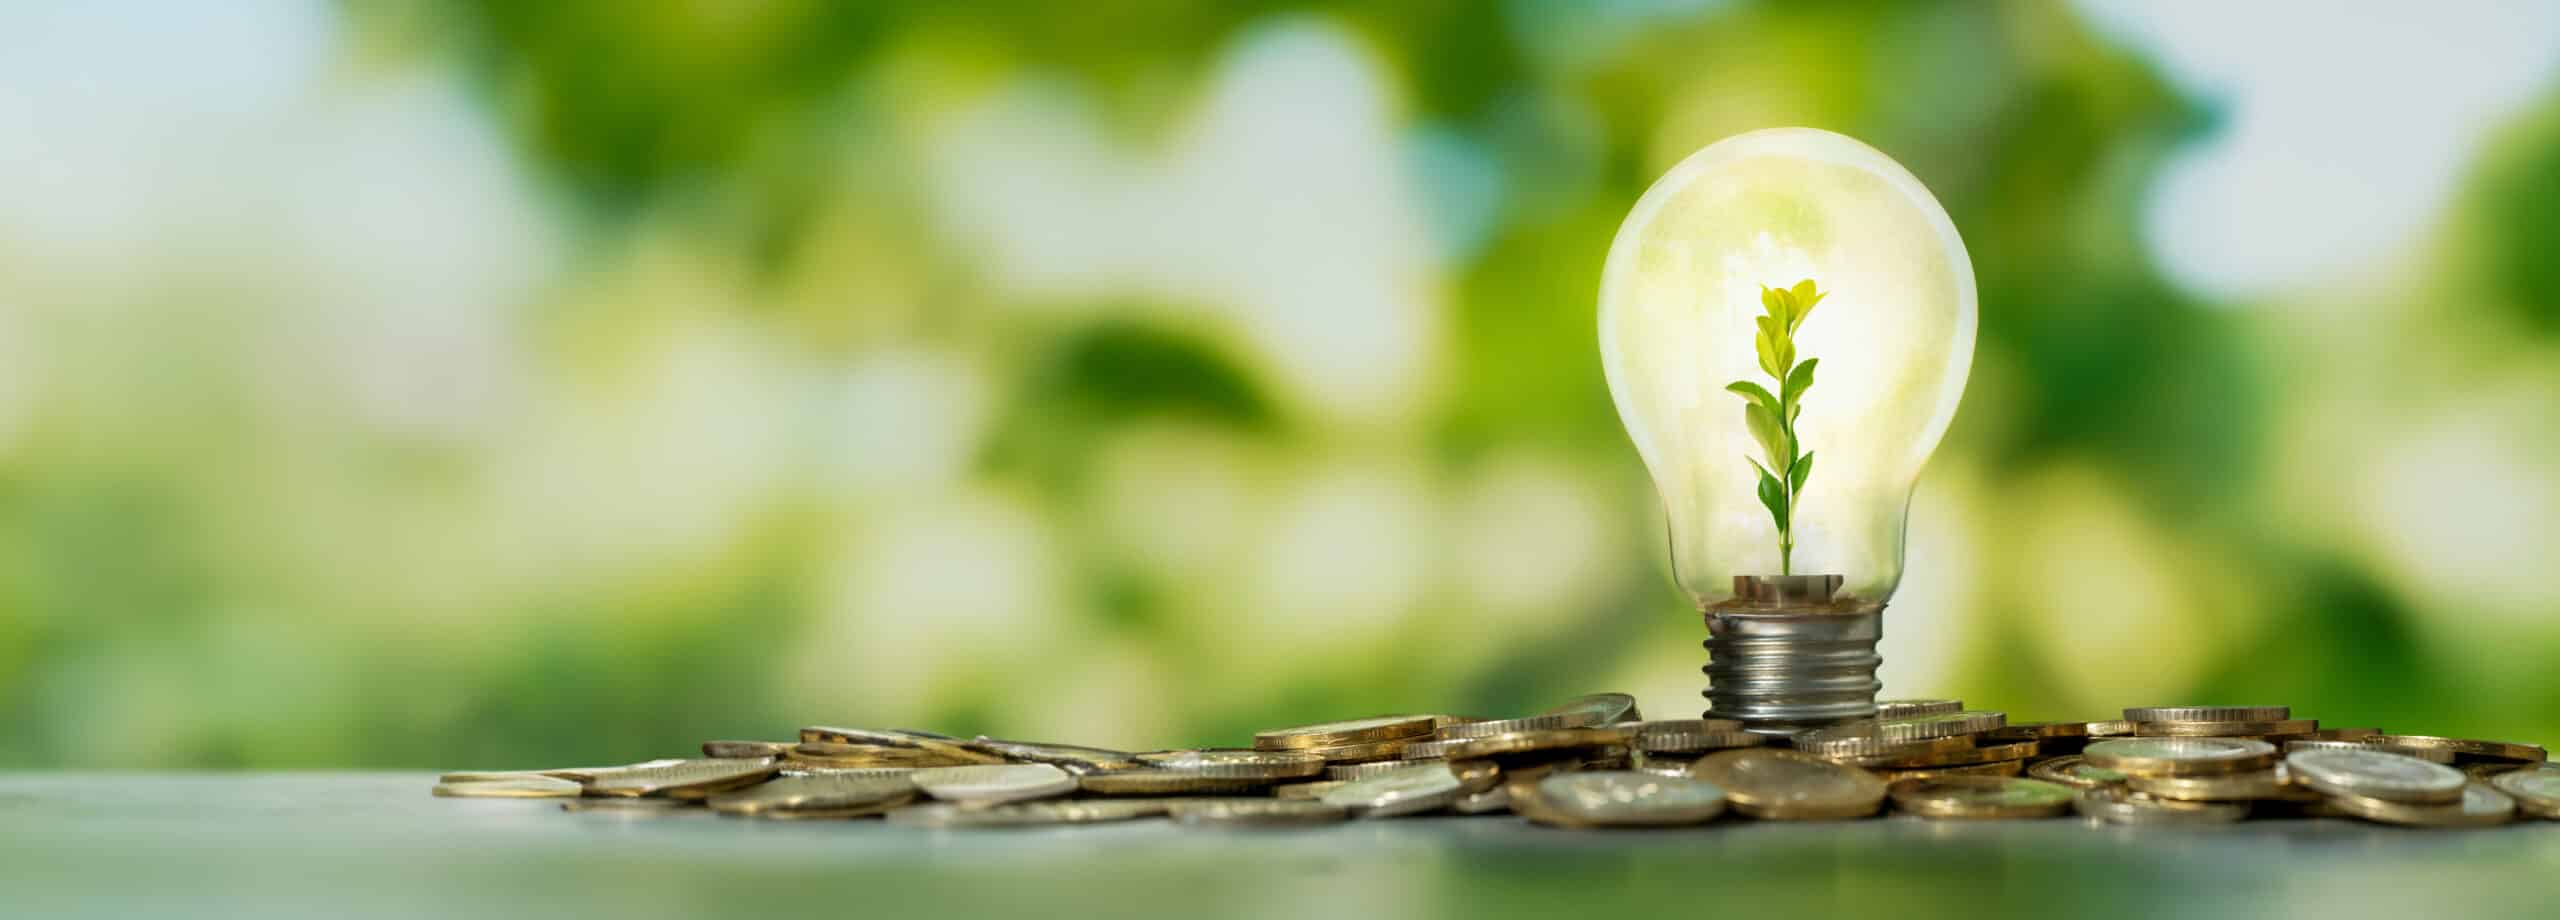 lightbulb and coins